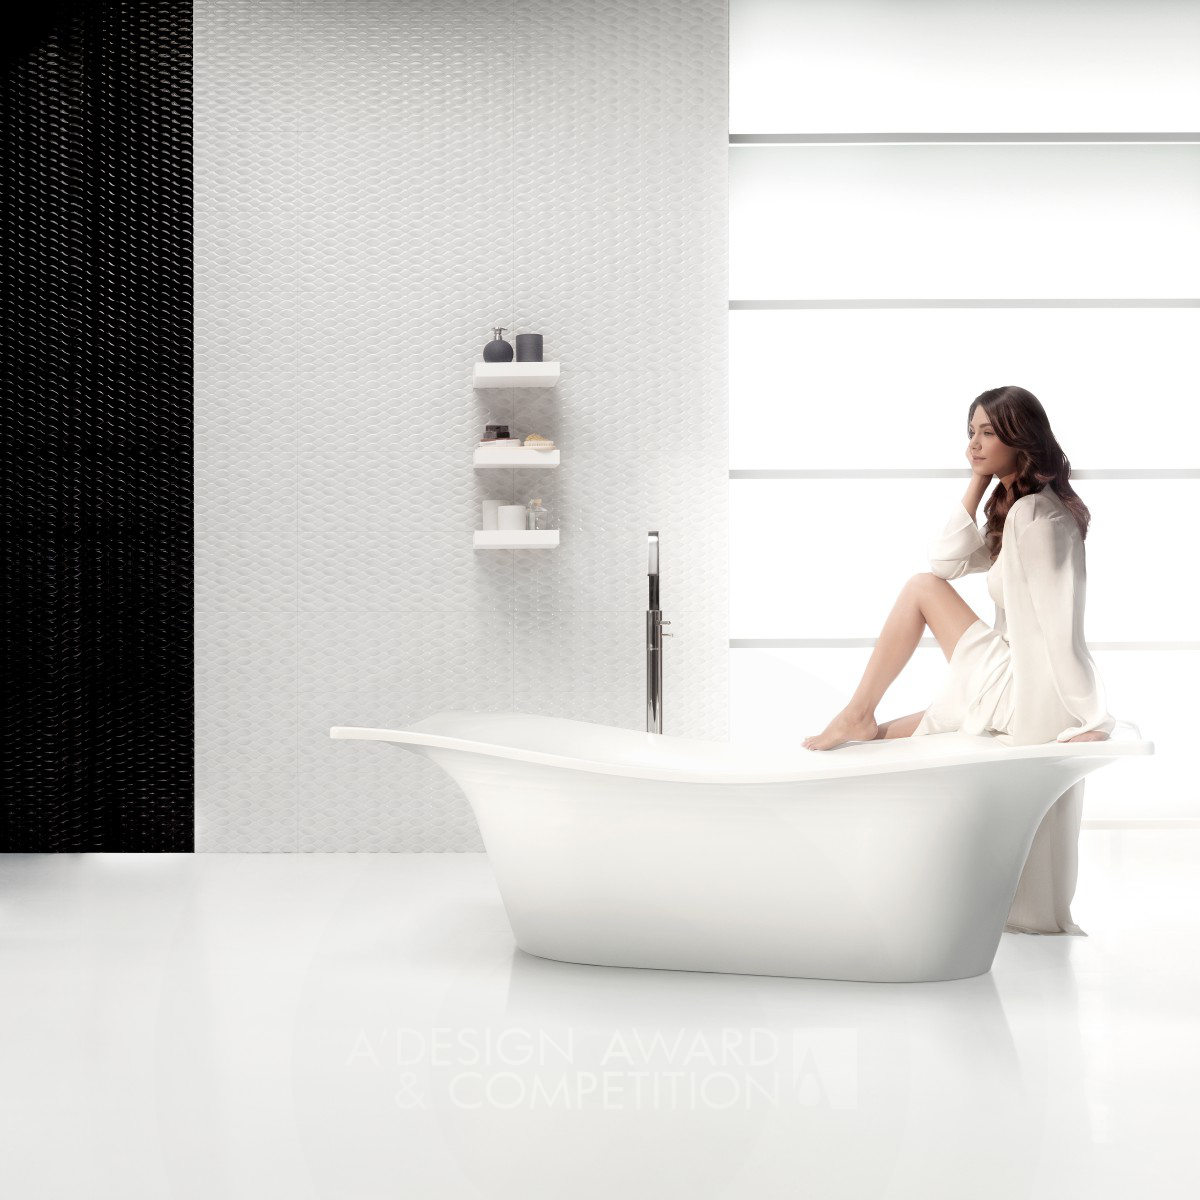 LOTUS bathroom set by Bien Seramik Design Team